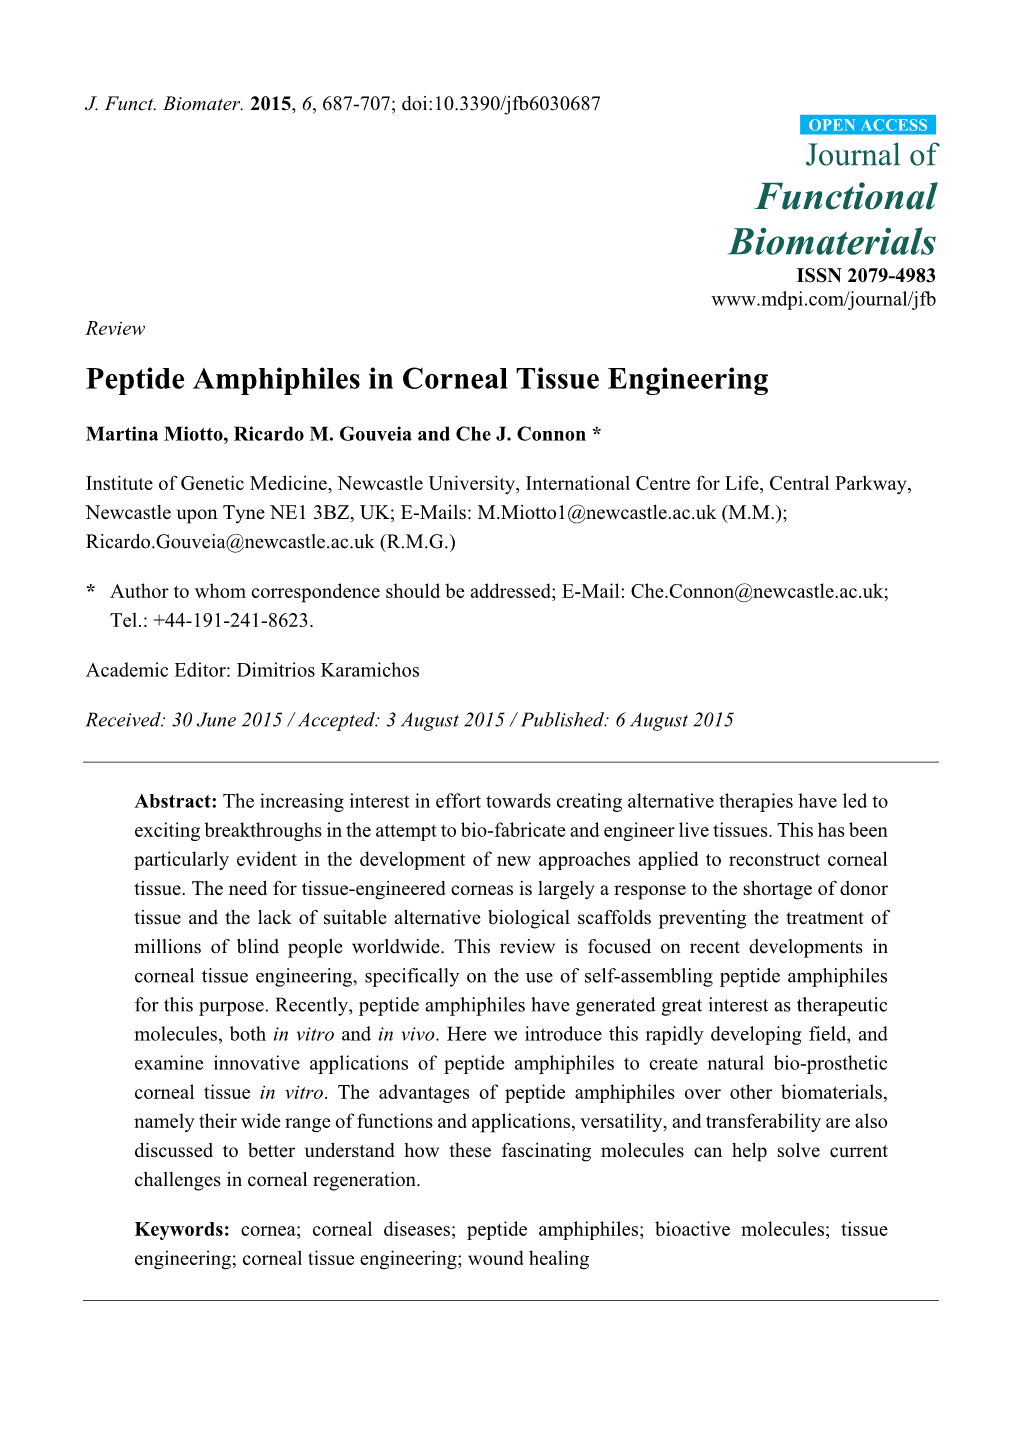 Peptide Amphiphiles in Corneal Tissue Engineering